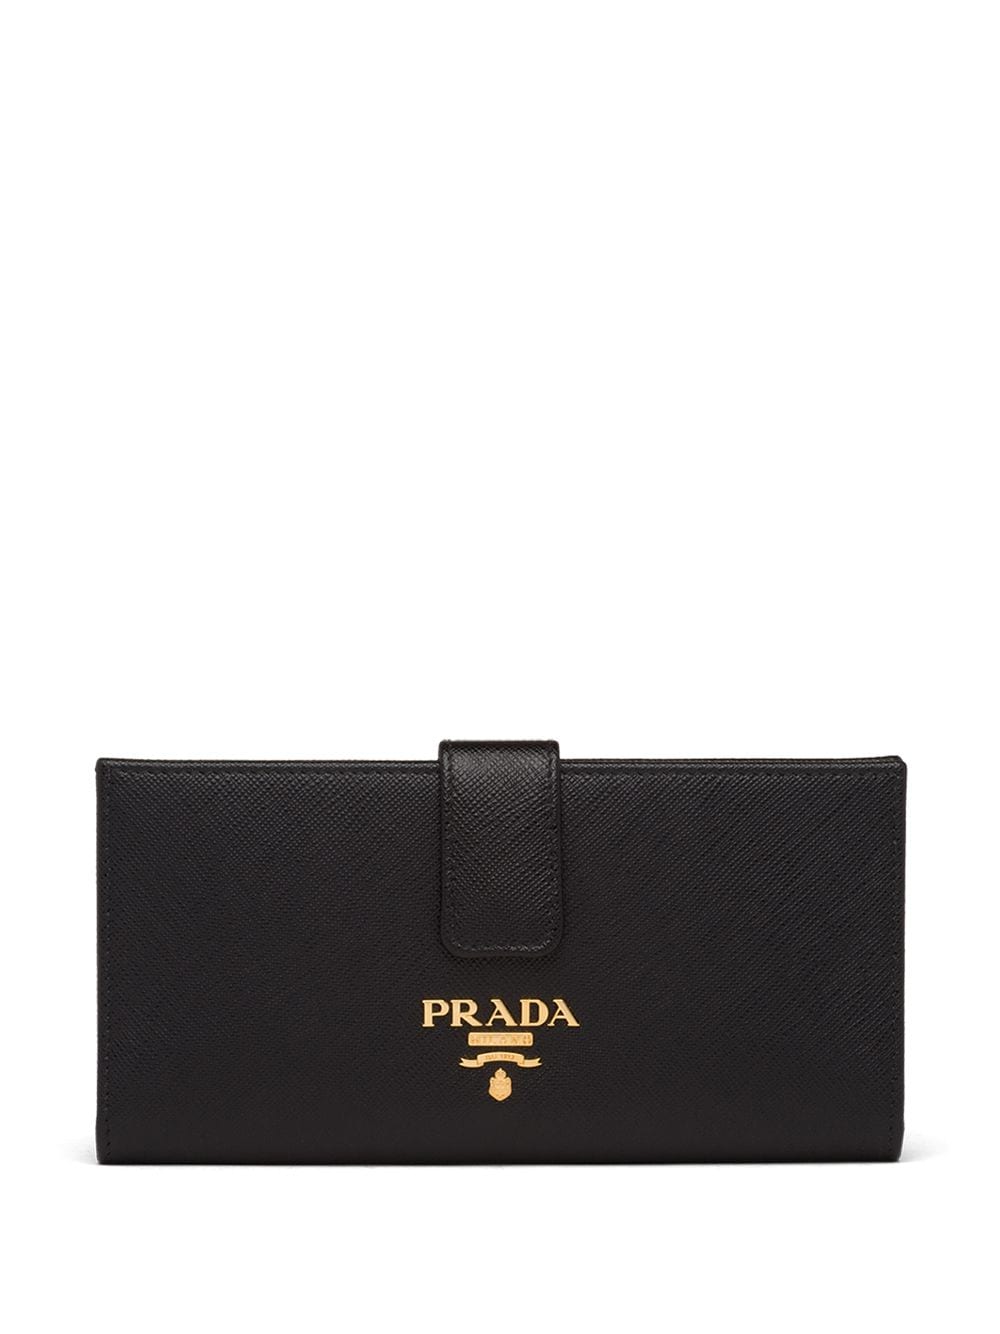 Image 1 of Prada large logo plaque wallet